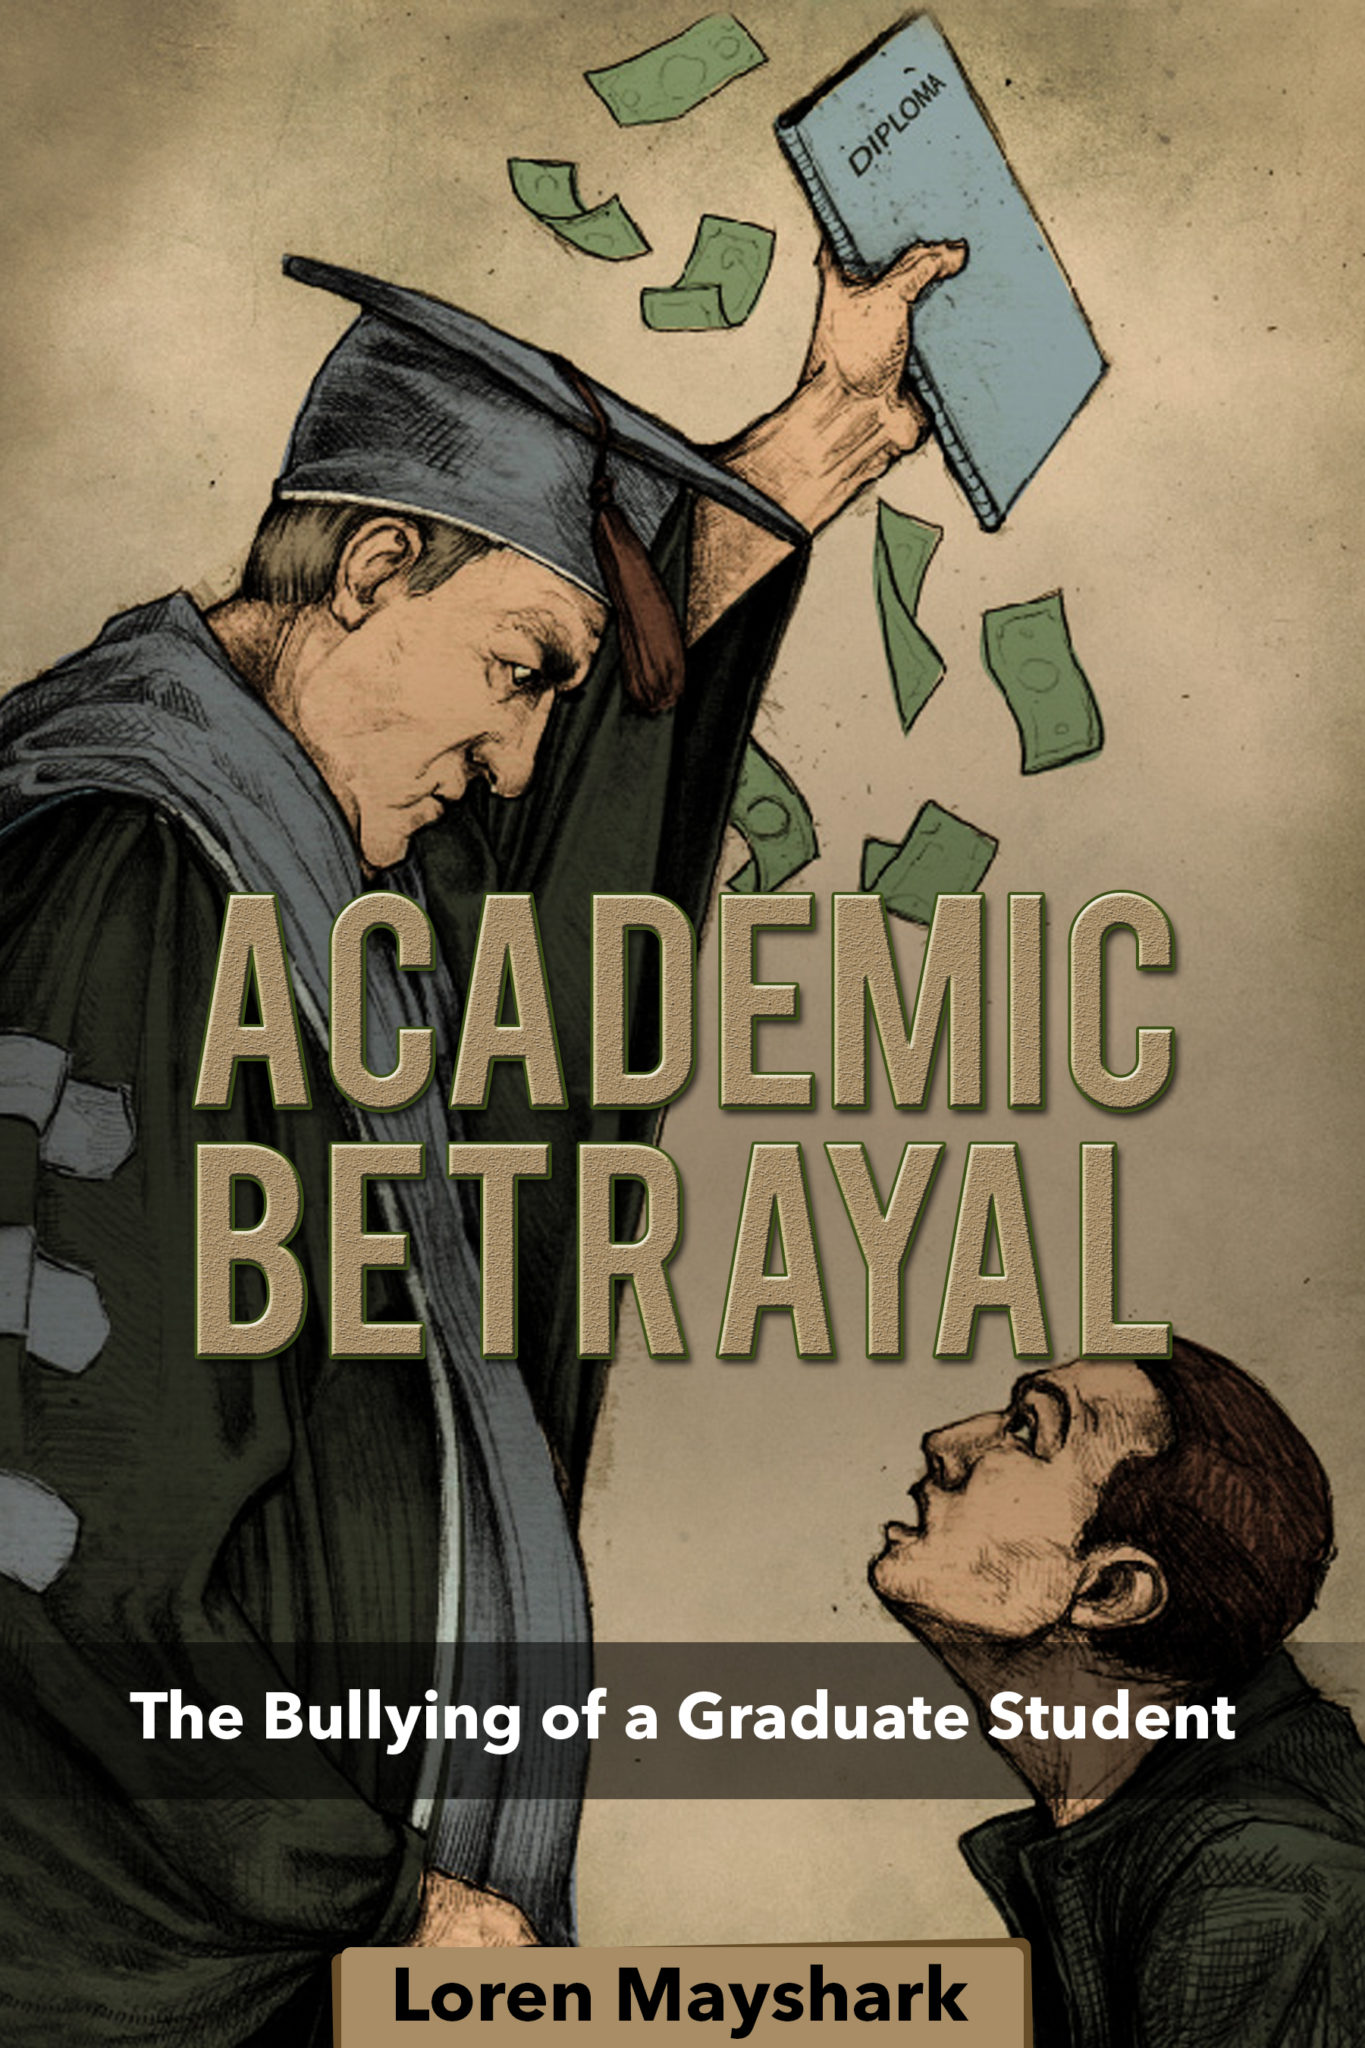 FREE: Academic Betrayal: The Bullying of a Graduate Student by Loren Mayshark